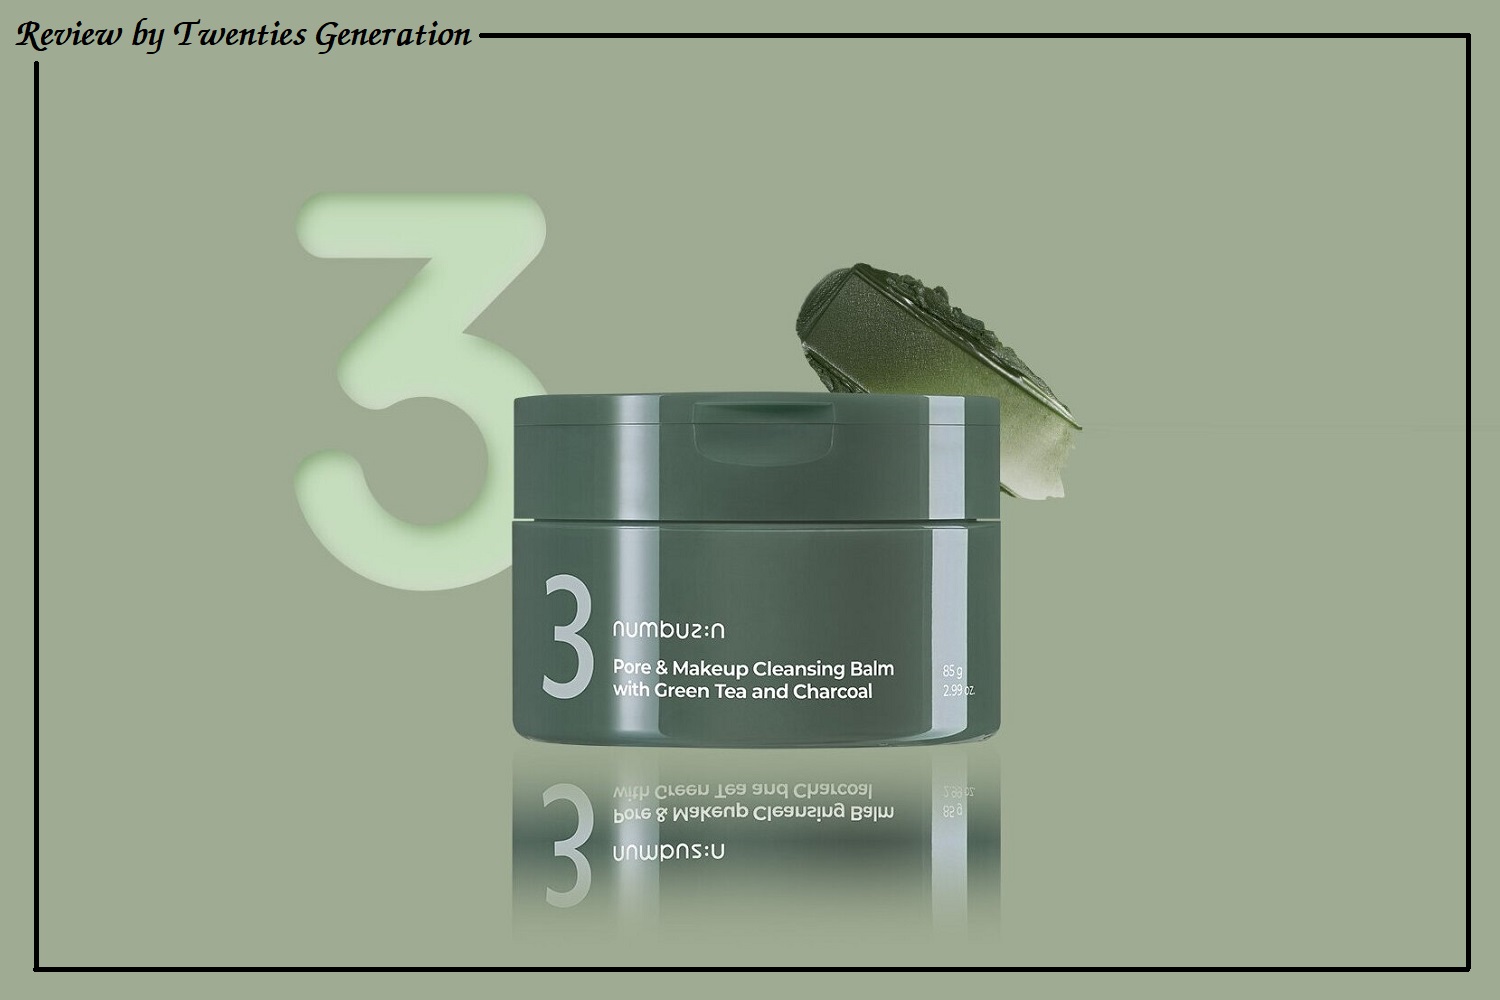 Numbuzin no.3 Pore & Makeup Cleansing Balm Ingredients